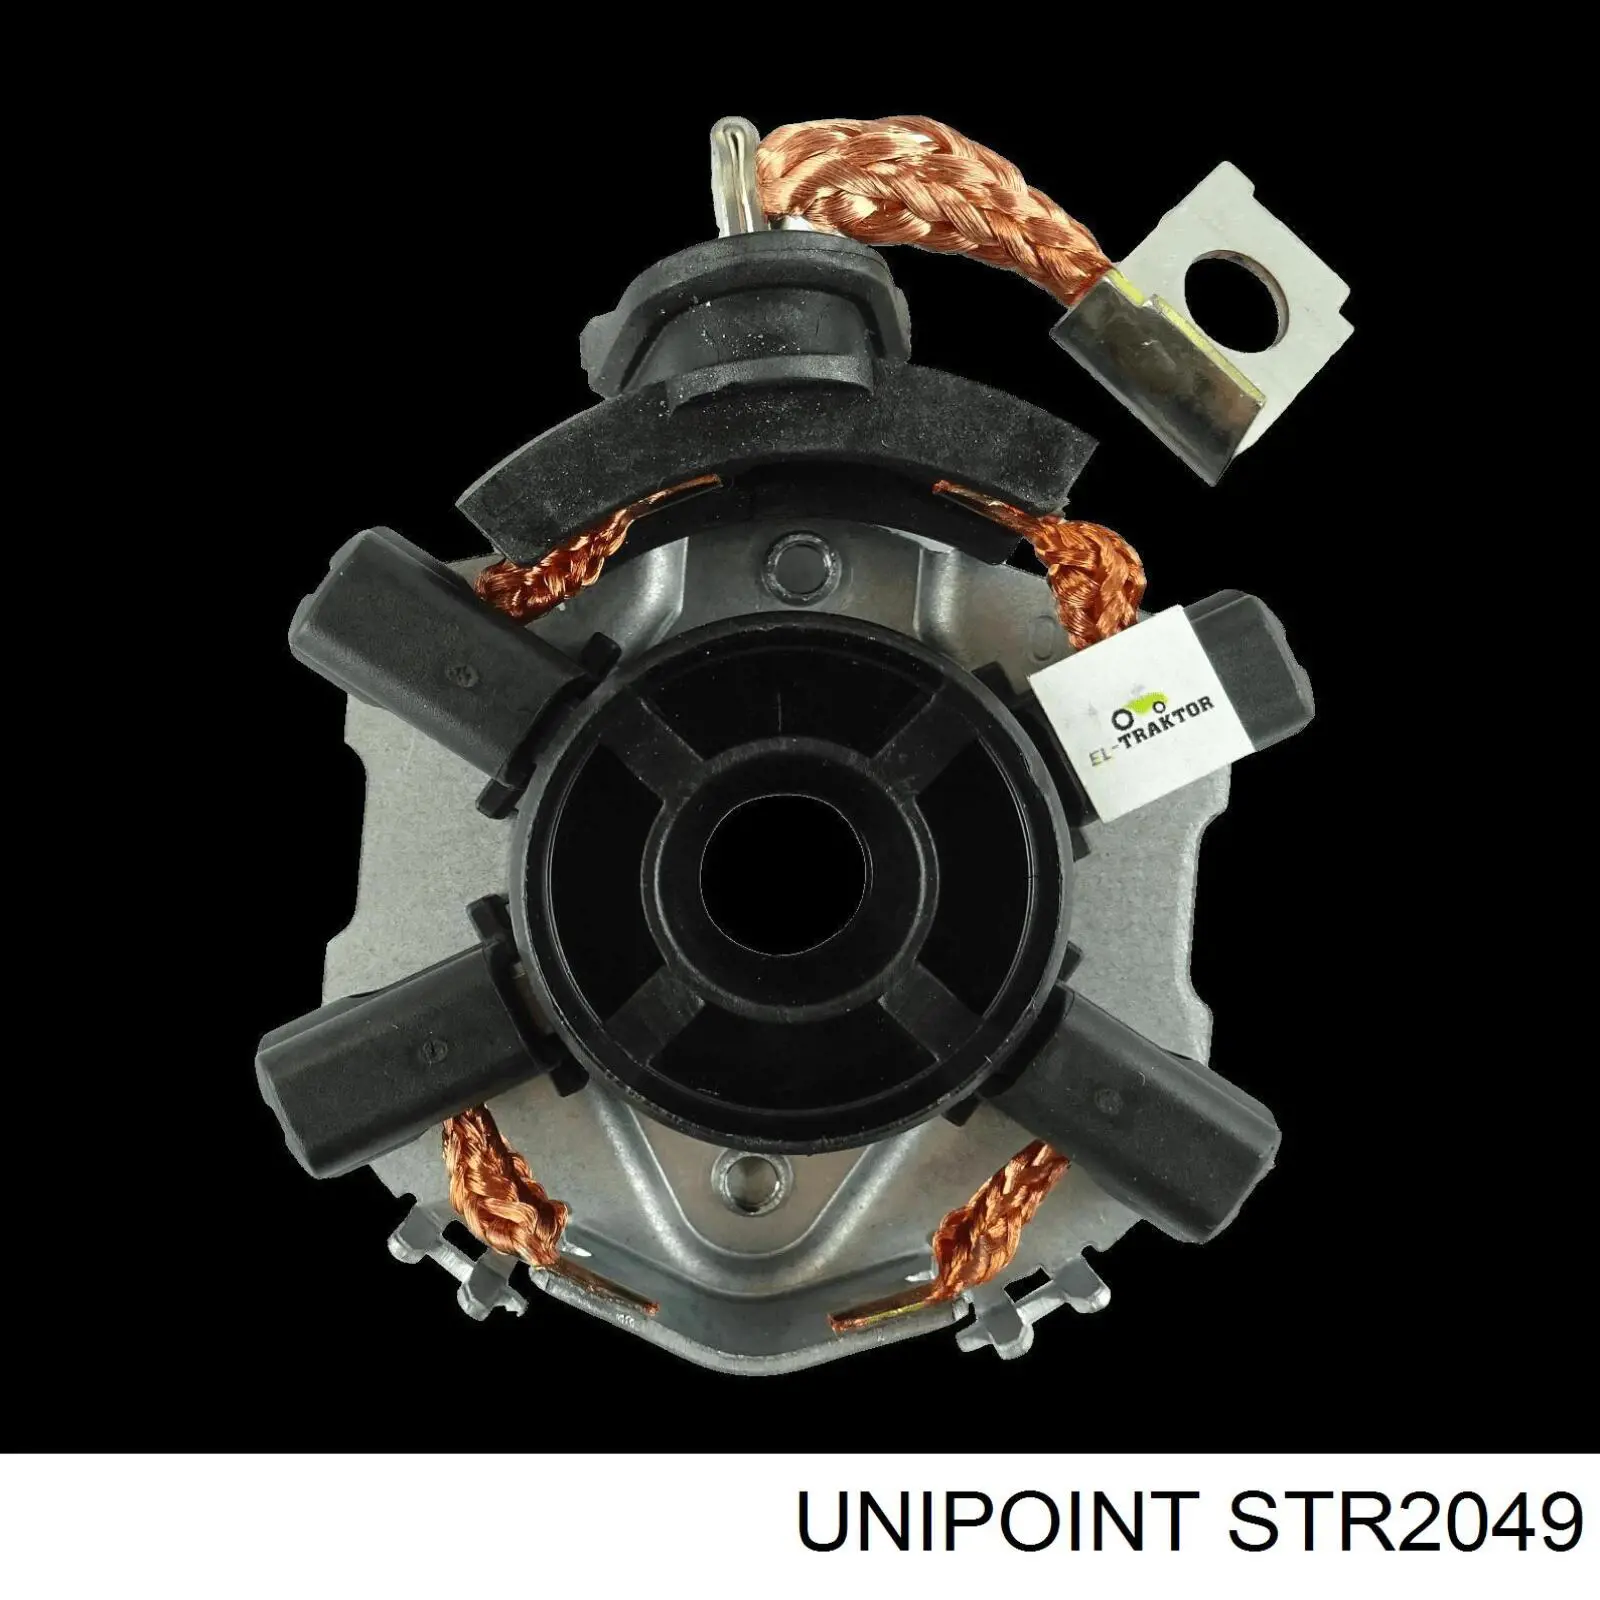 STR2049 Unipoint